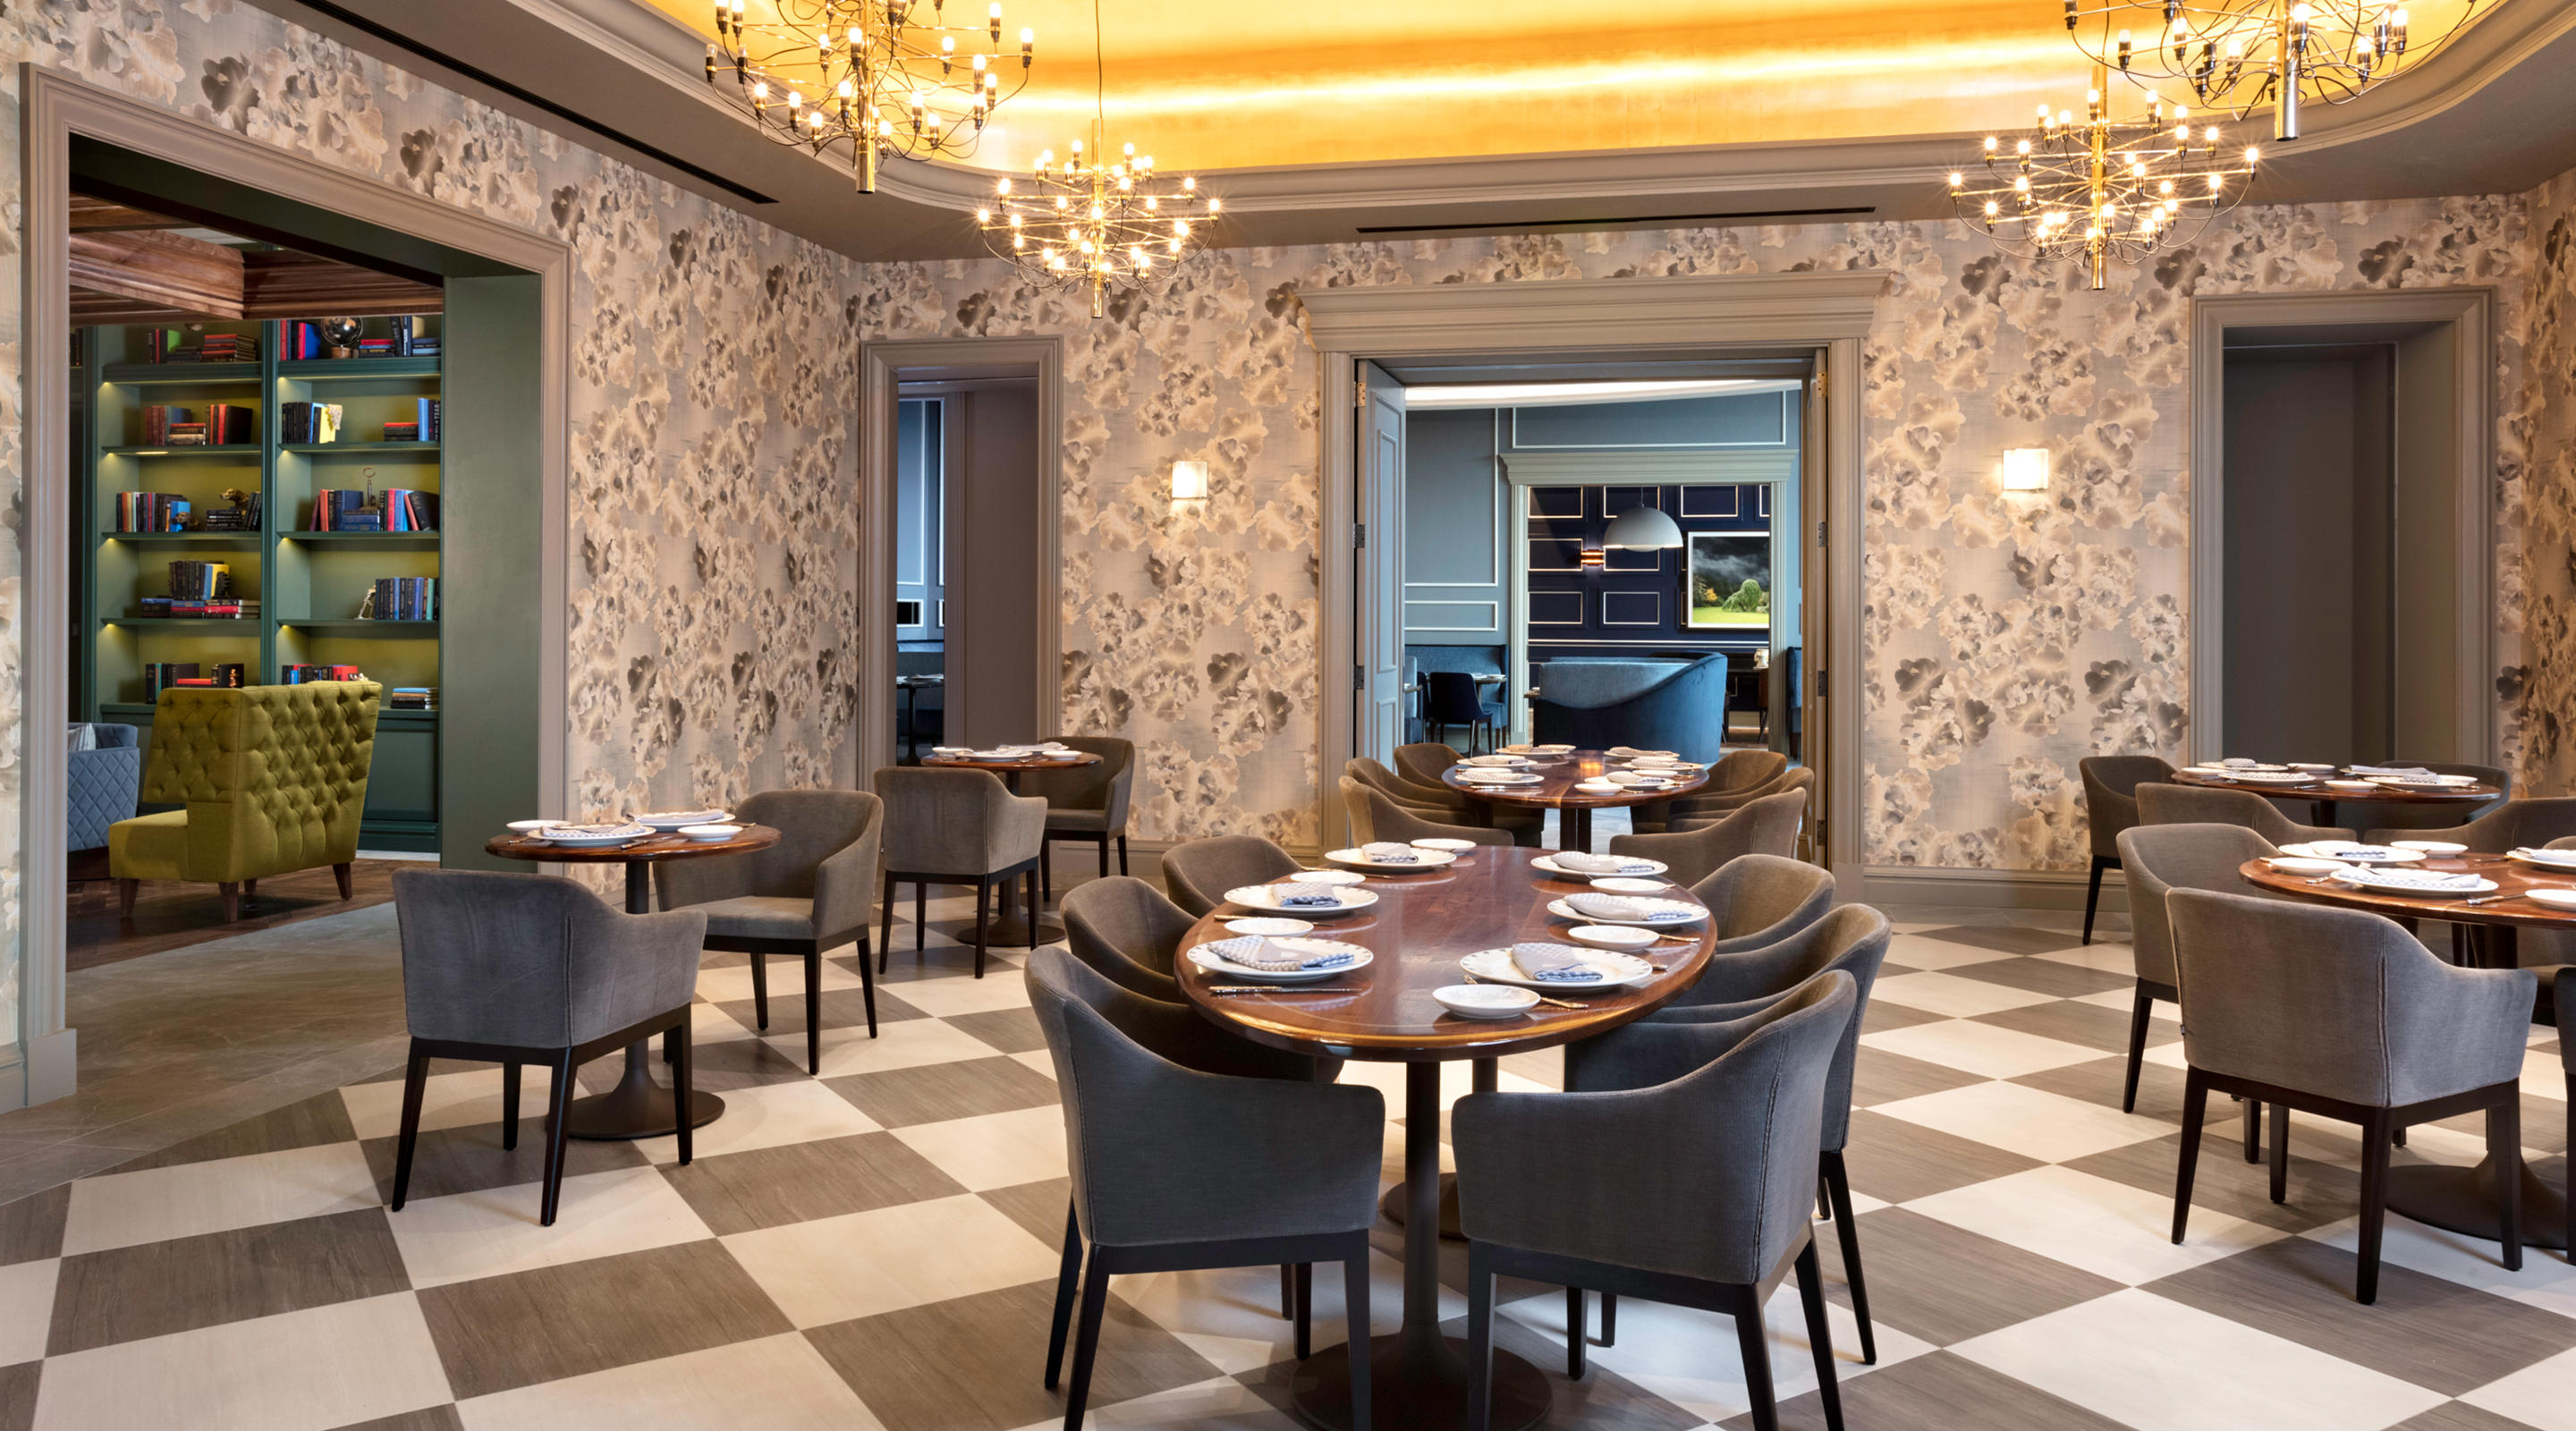 Voltaggio Steak House features fine dining from Top Chef stars Bryan and Michael Voltaggio.